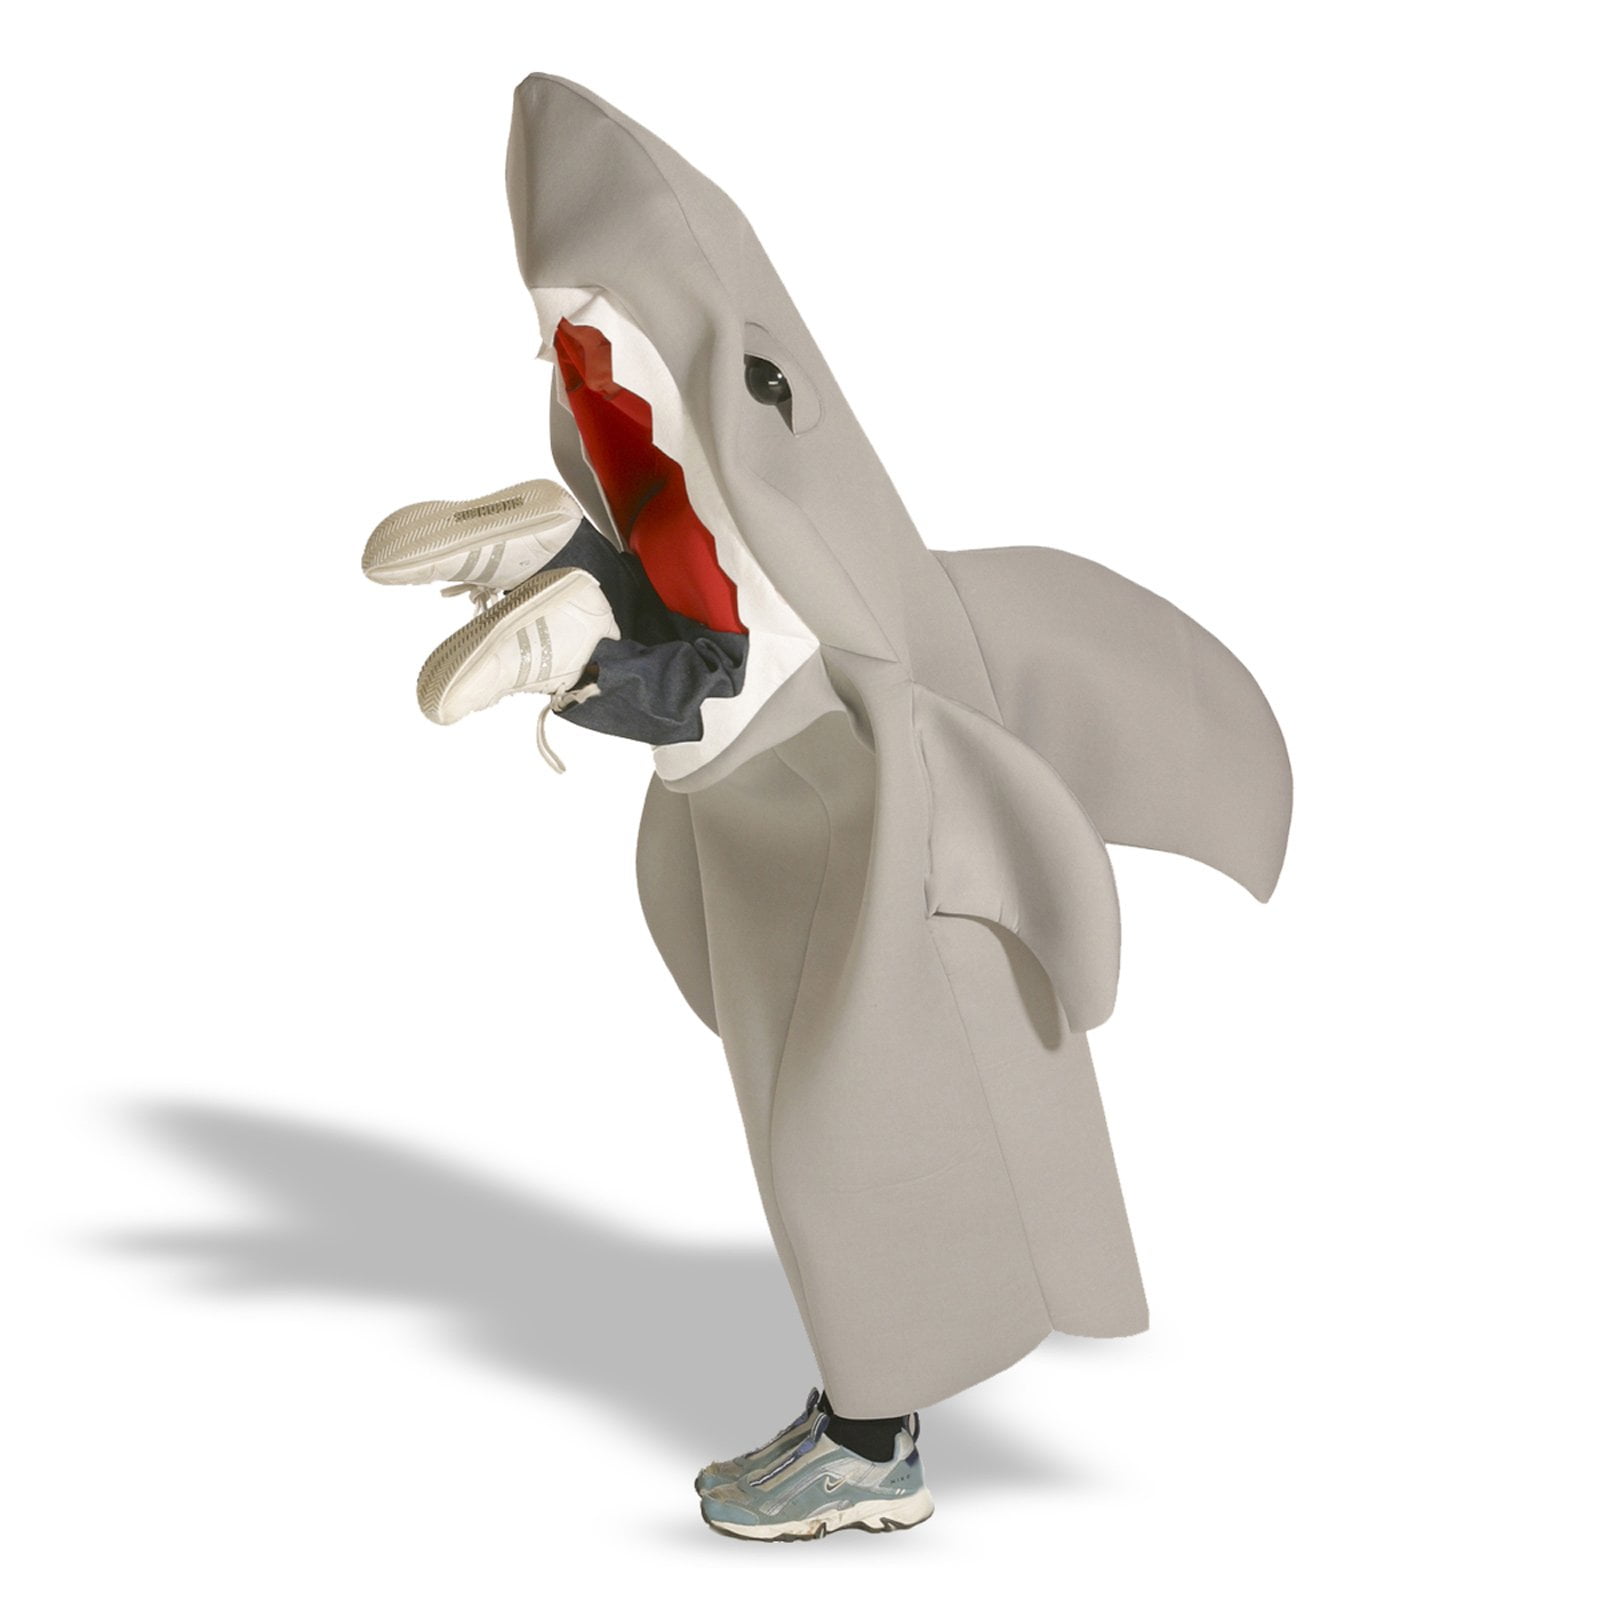 Rasta Imposta Shark Attack Costume